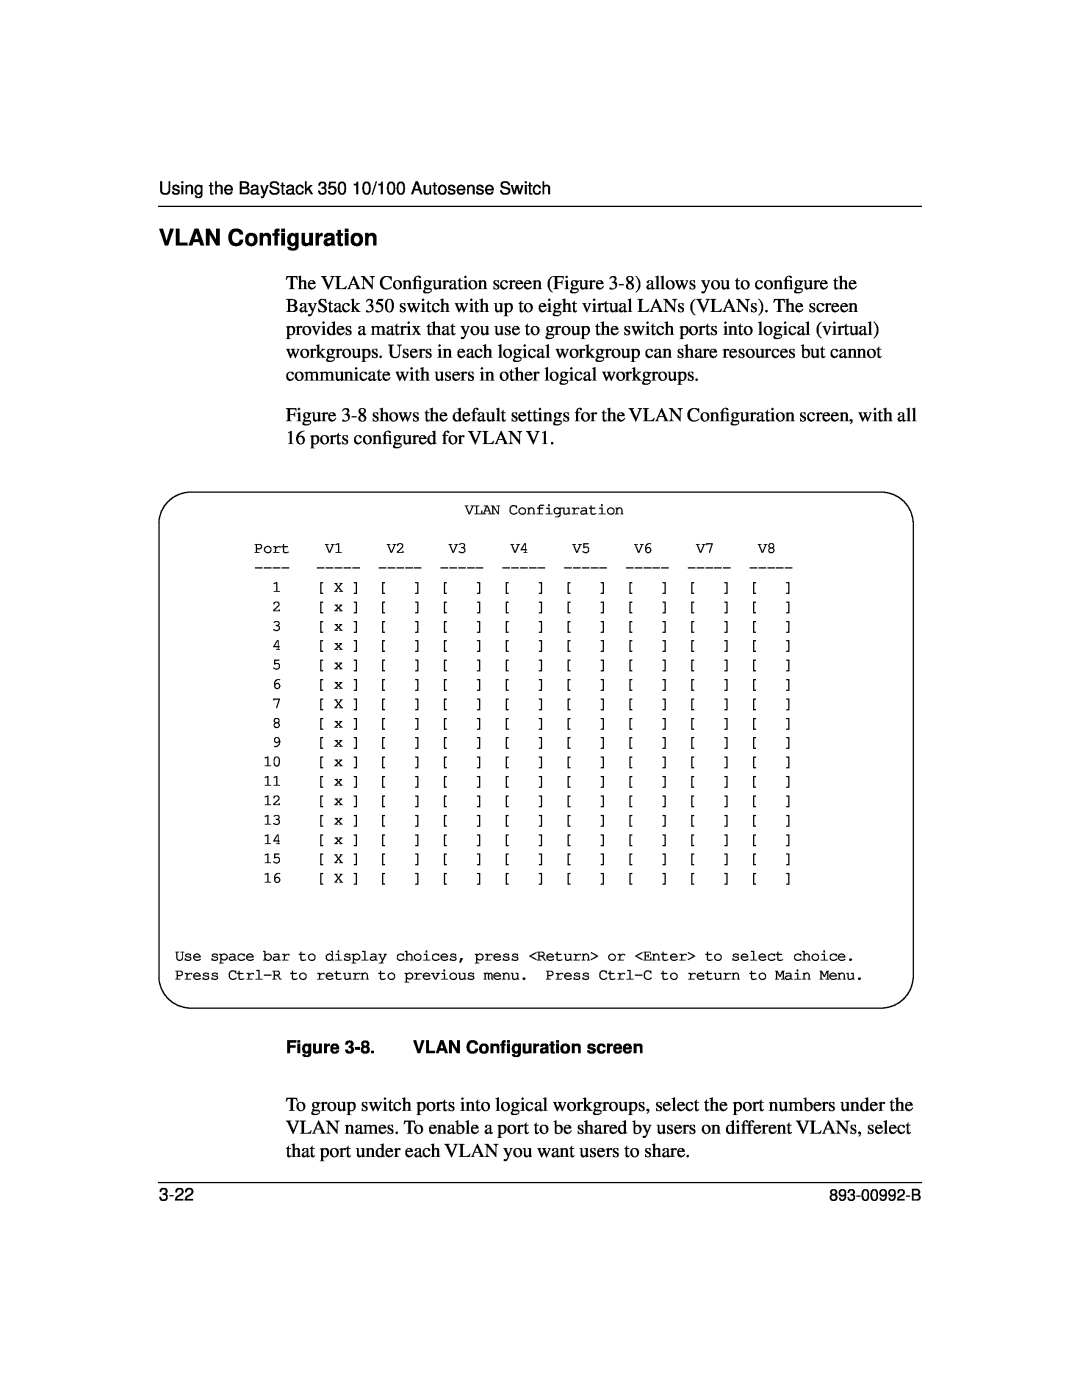 Bay Technical Associates 350 manual 8. VLAN Conﬁguration screen 